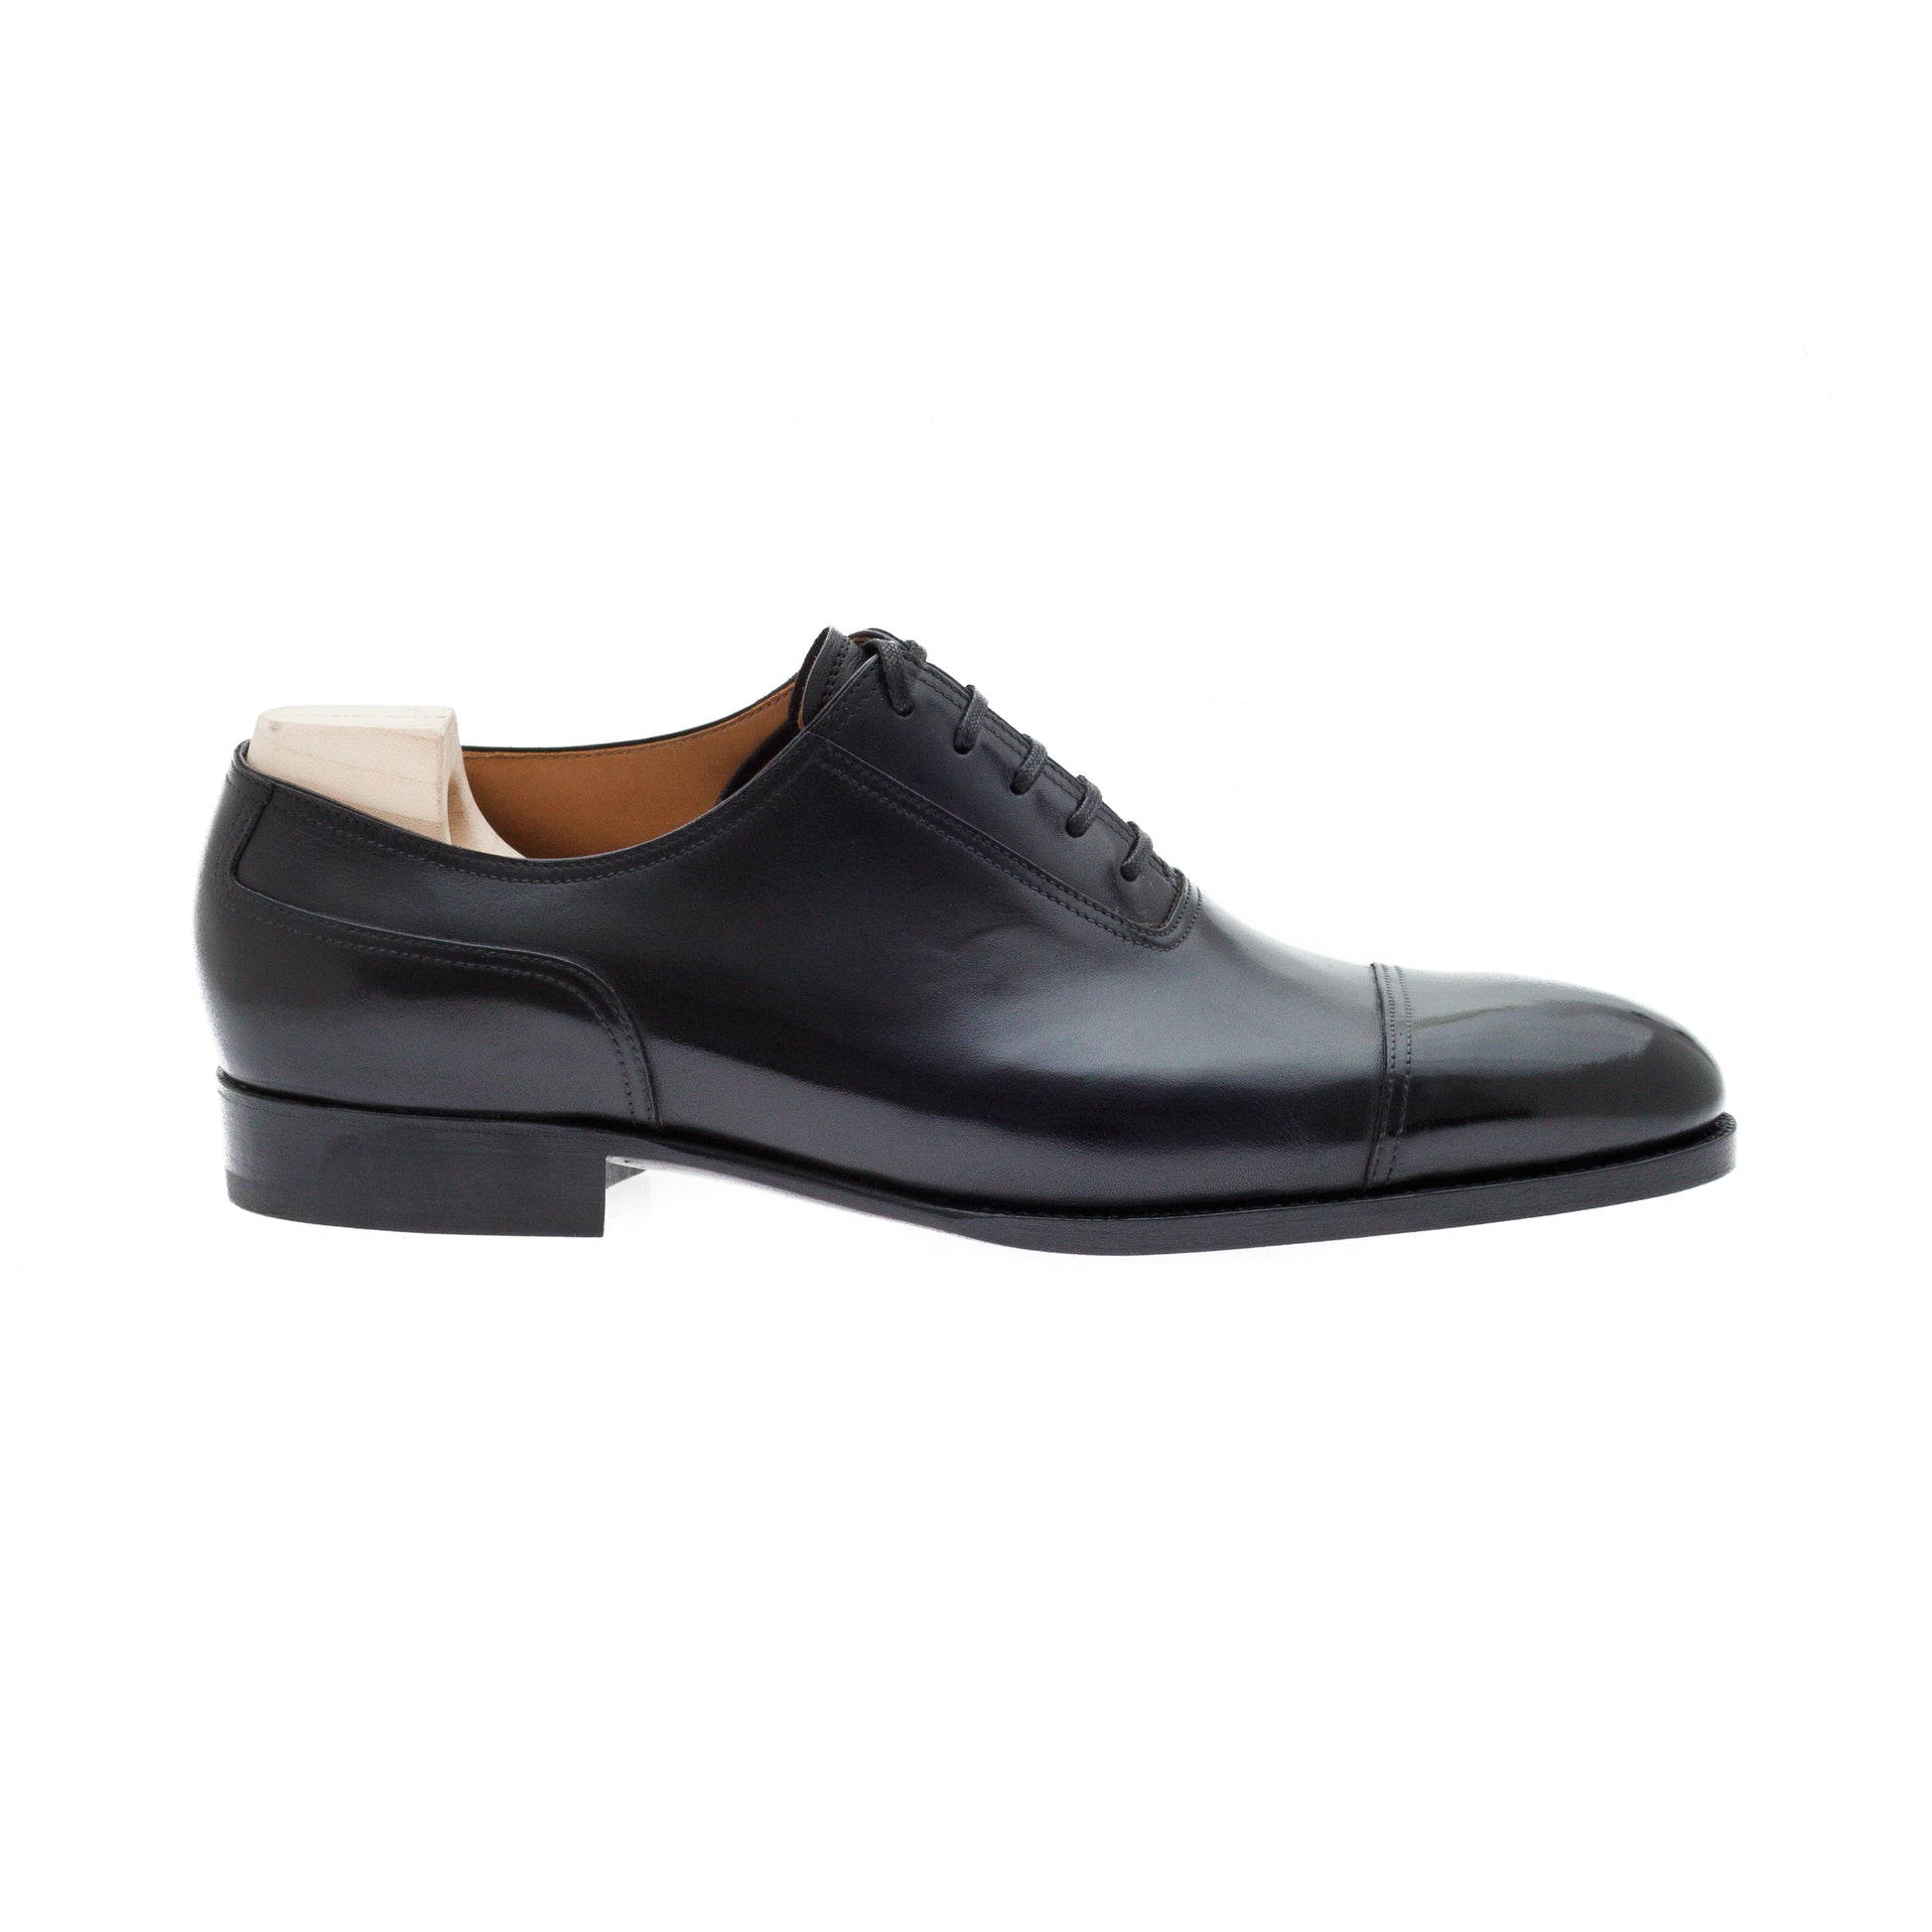 Formal Captoe Oxford in black Crust calf leather – Saint Crispin's